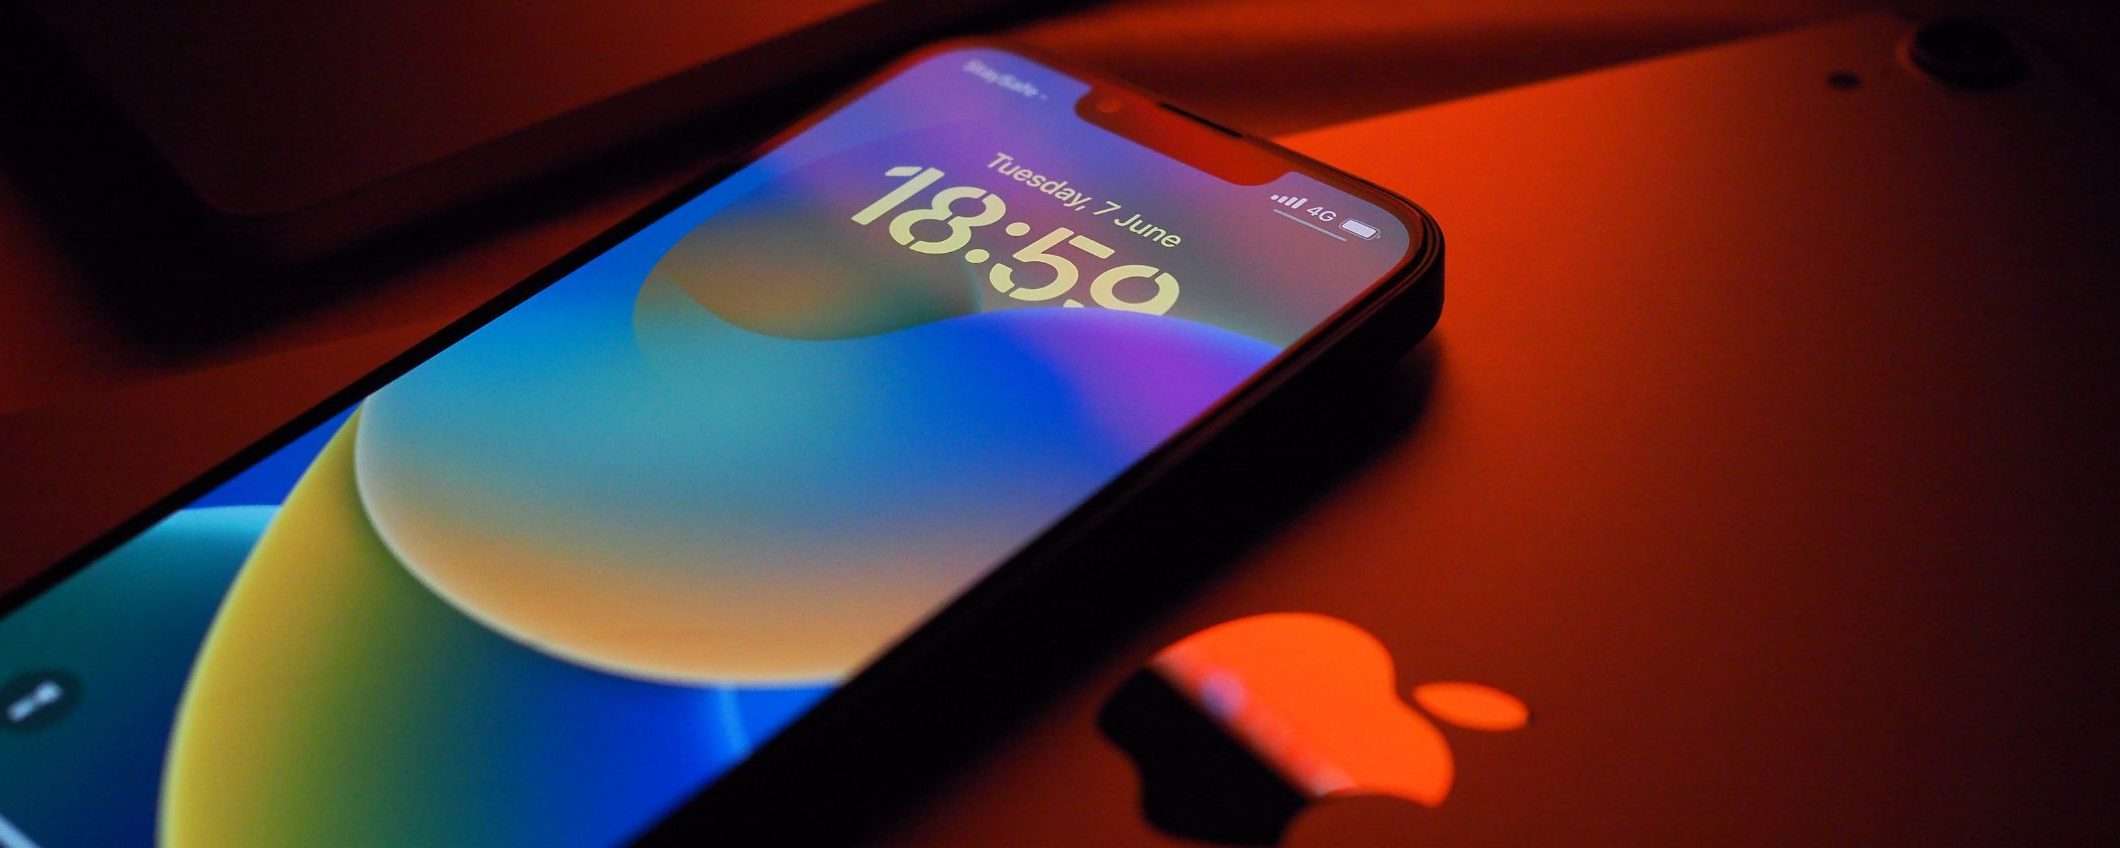 Apple: abbonamento iPhone in test, in arrivo a breve